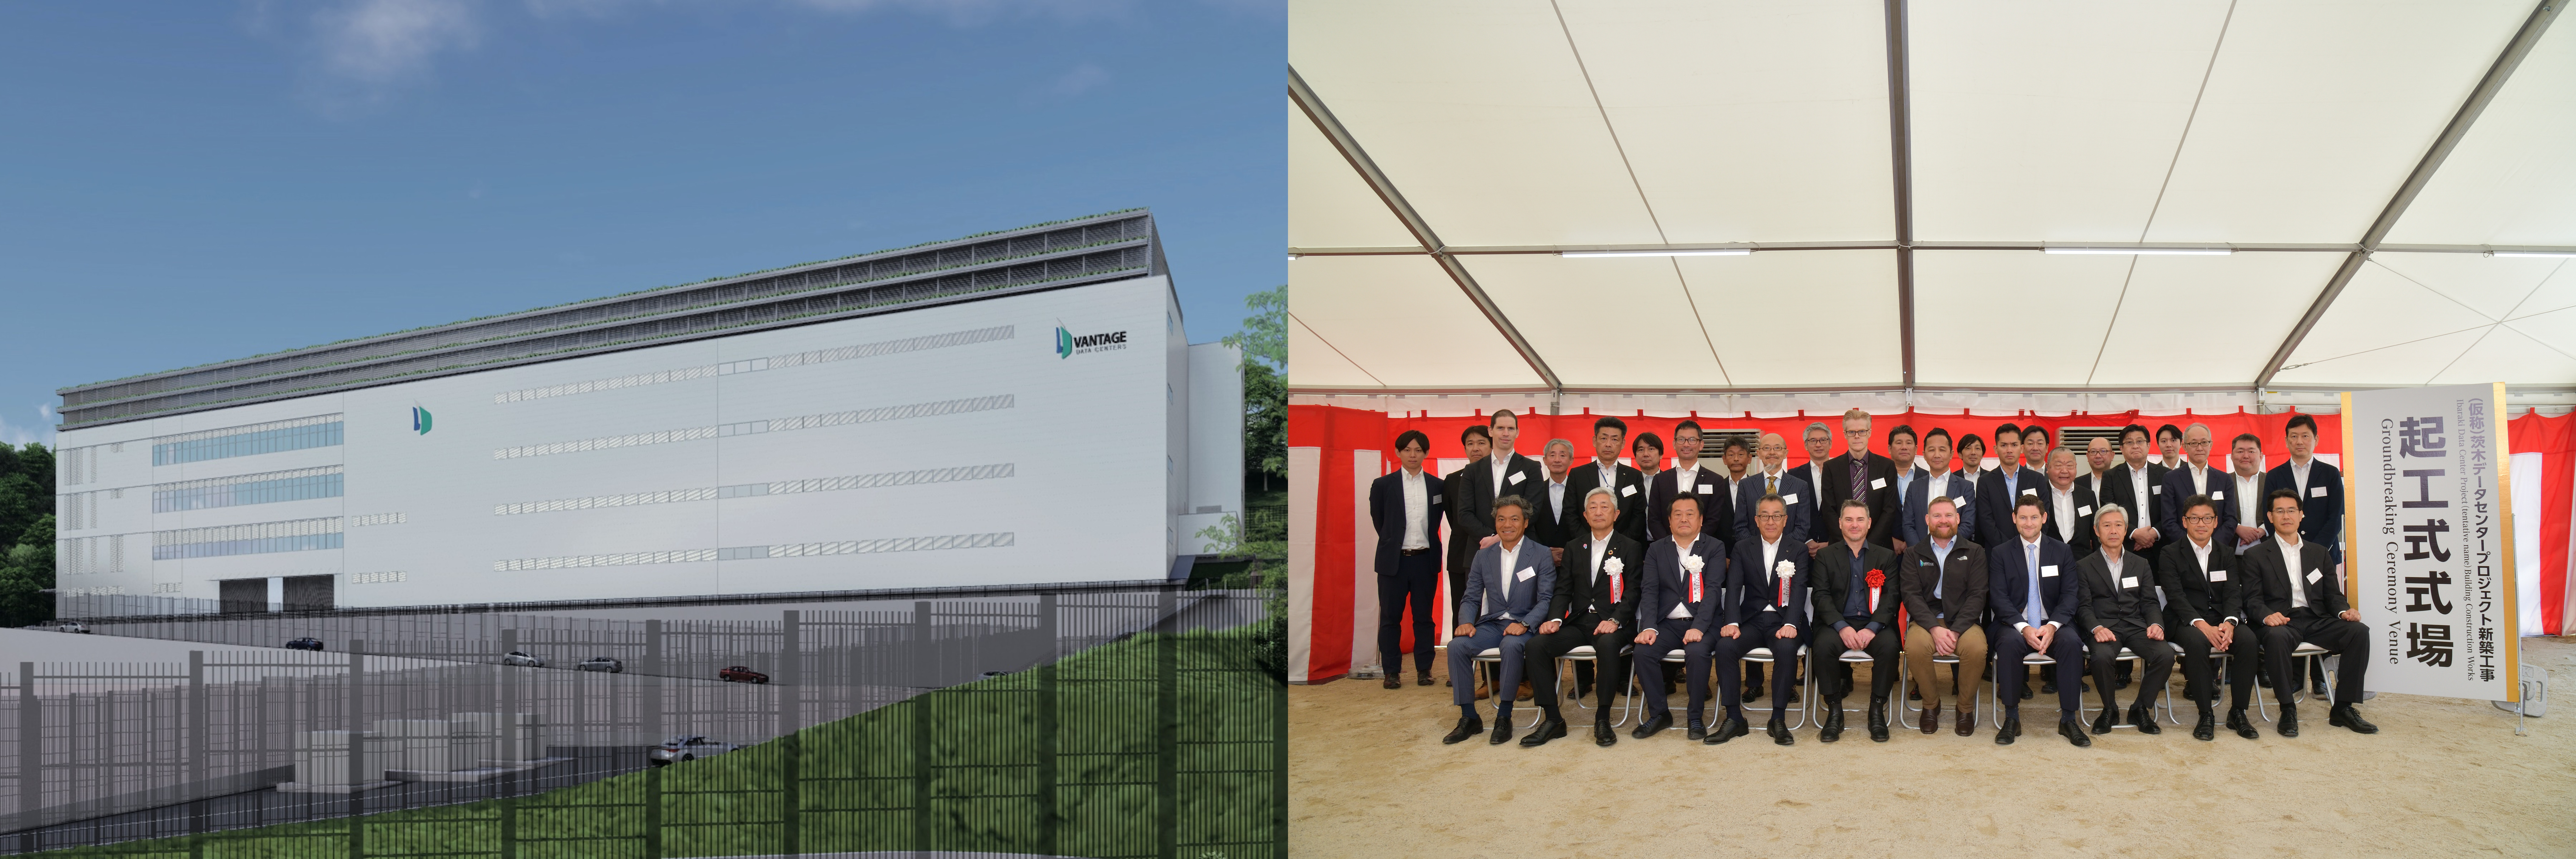 Left: Rendering of Vantage’s KIX1 Campus in Osaka, Japan Right: Vantage Data Centers’ KIX1 Groundbreaking Ceremony